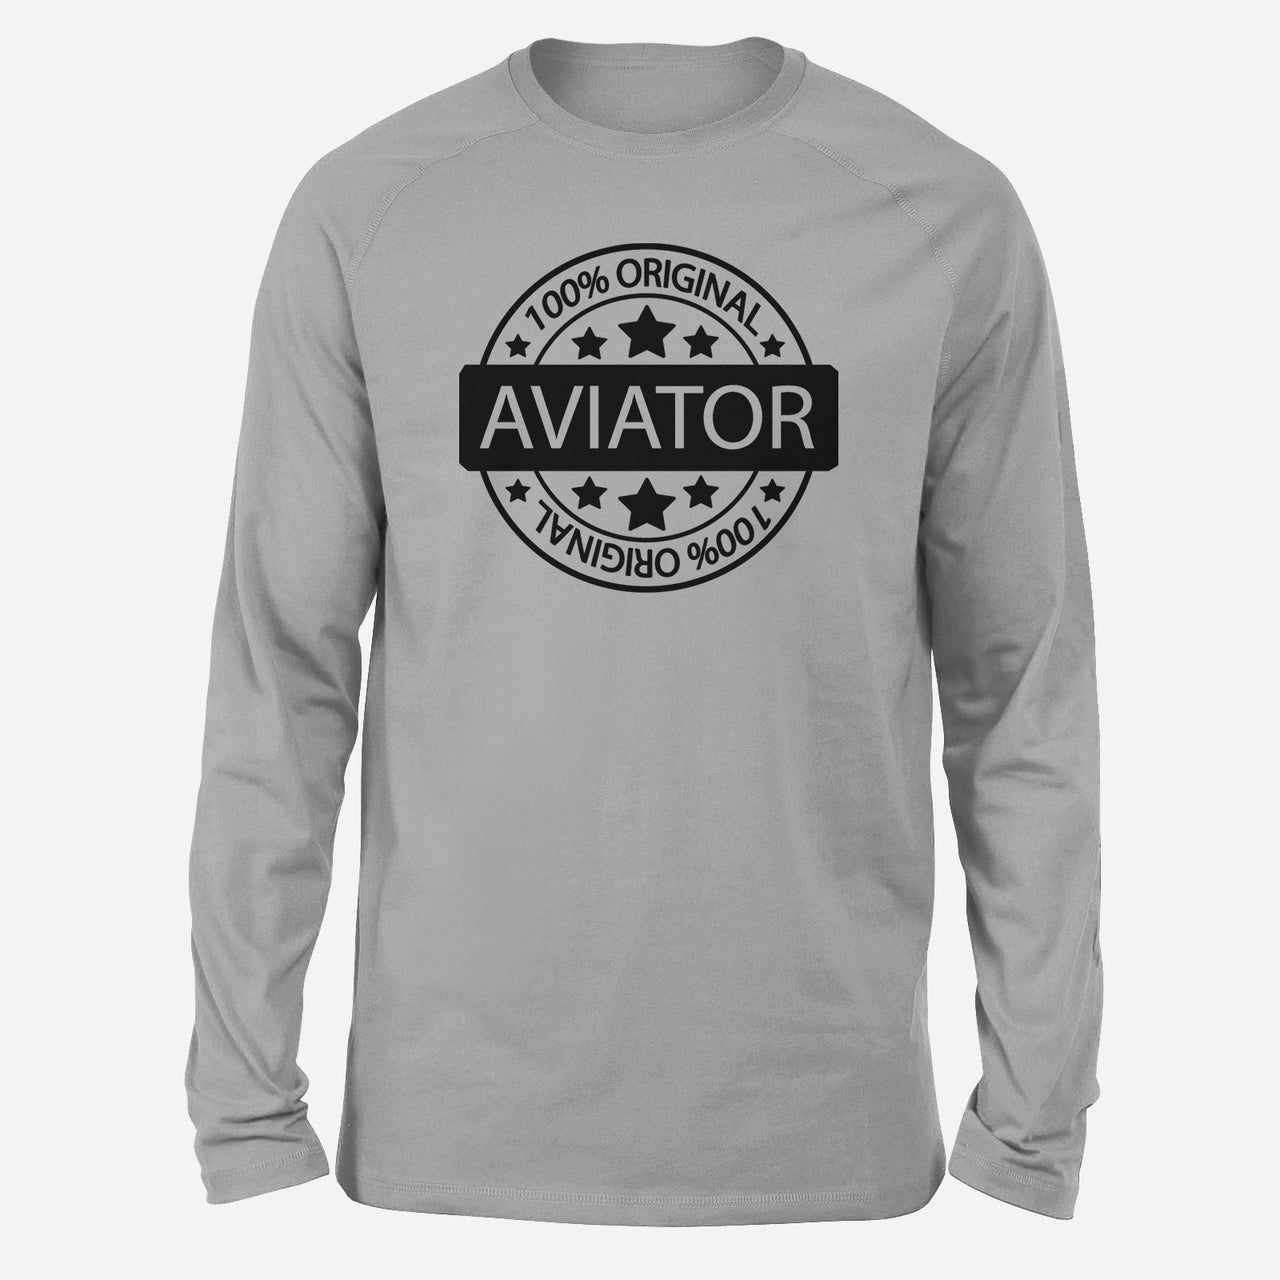 %100 Original Aviator Designed Long-Sleeve T-Shirts